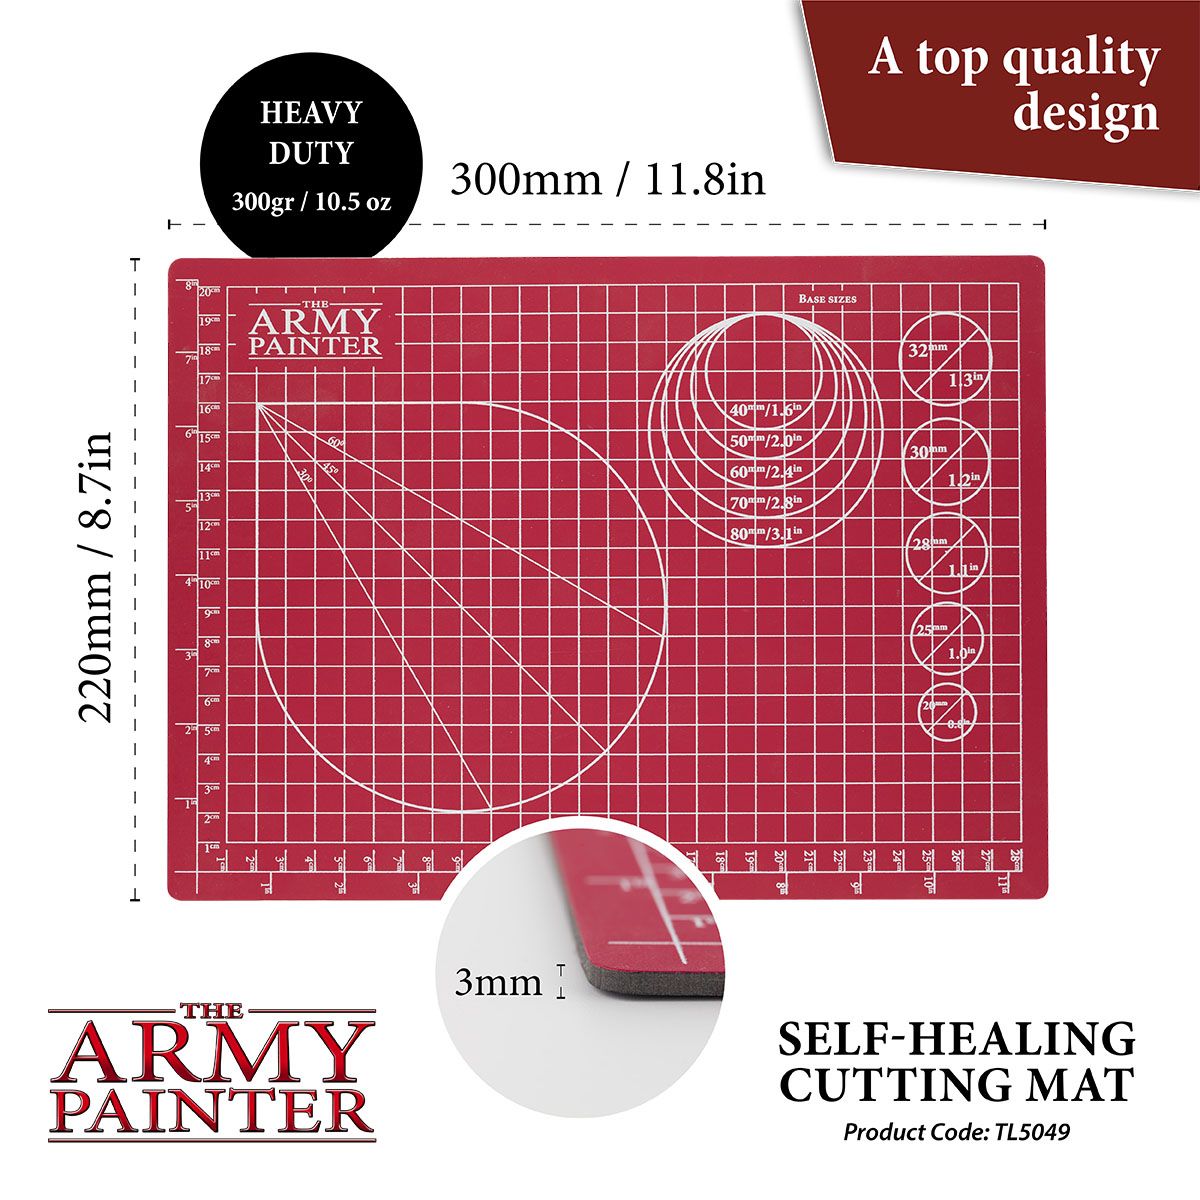 Self-Healing Cutting Mat (The Army Painter)